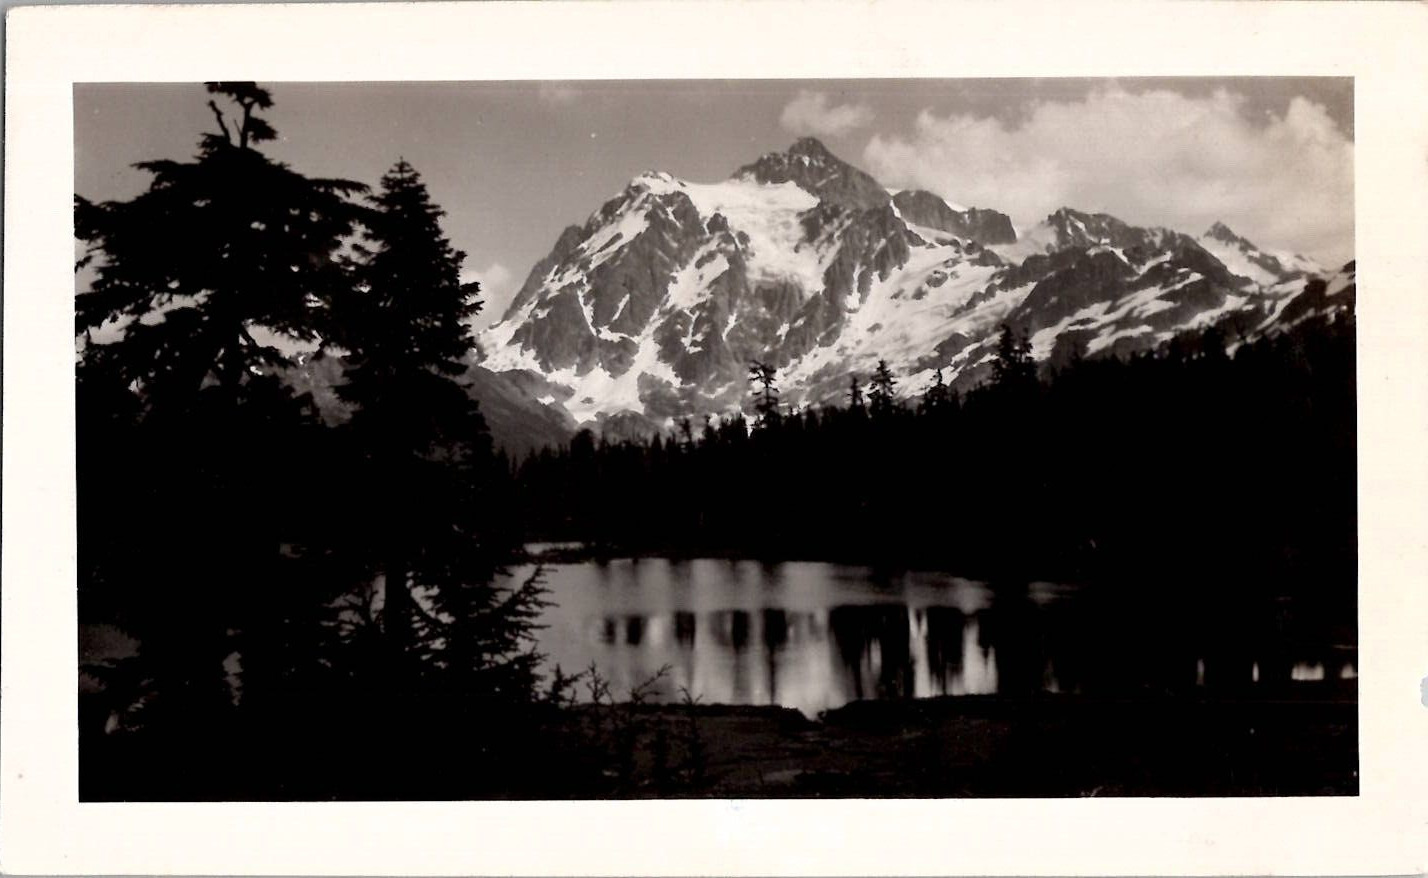 Mt Shuksan and Picture Lake Scenic Landscape Snapshot 1940s Vintage Photograph